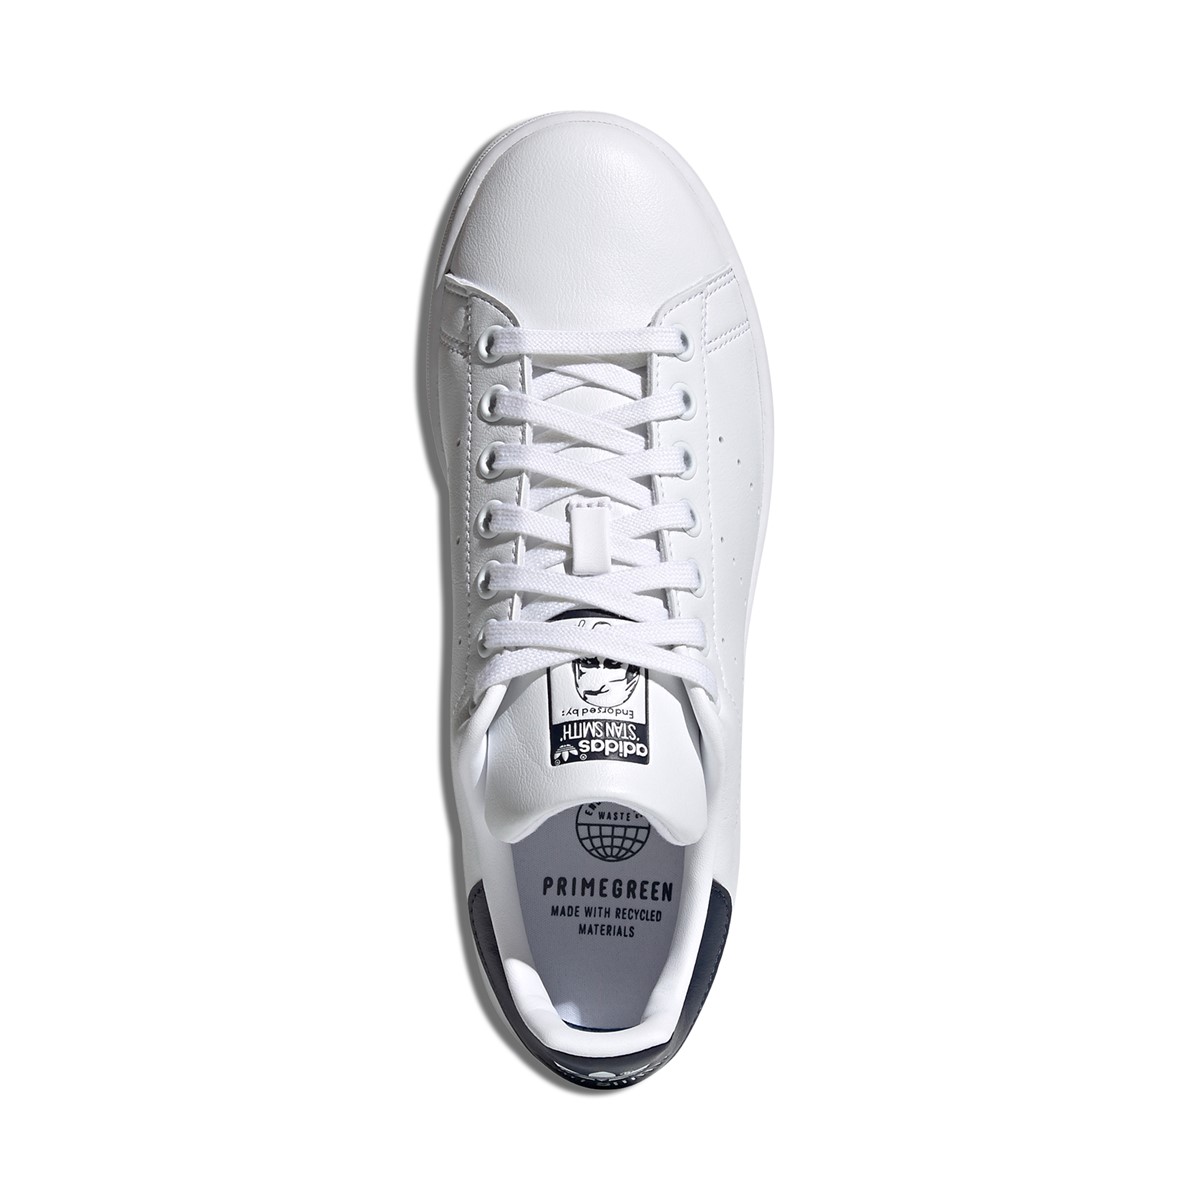 Women's Stan Smith Primegreen Sneakers in White/Navy | Little Burgundy